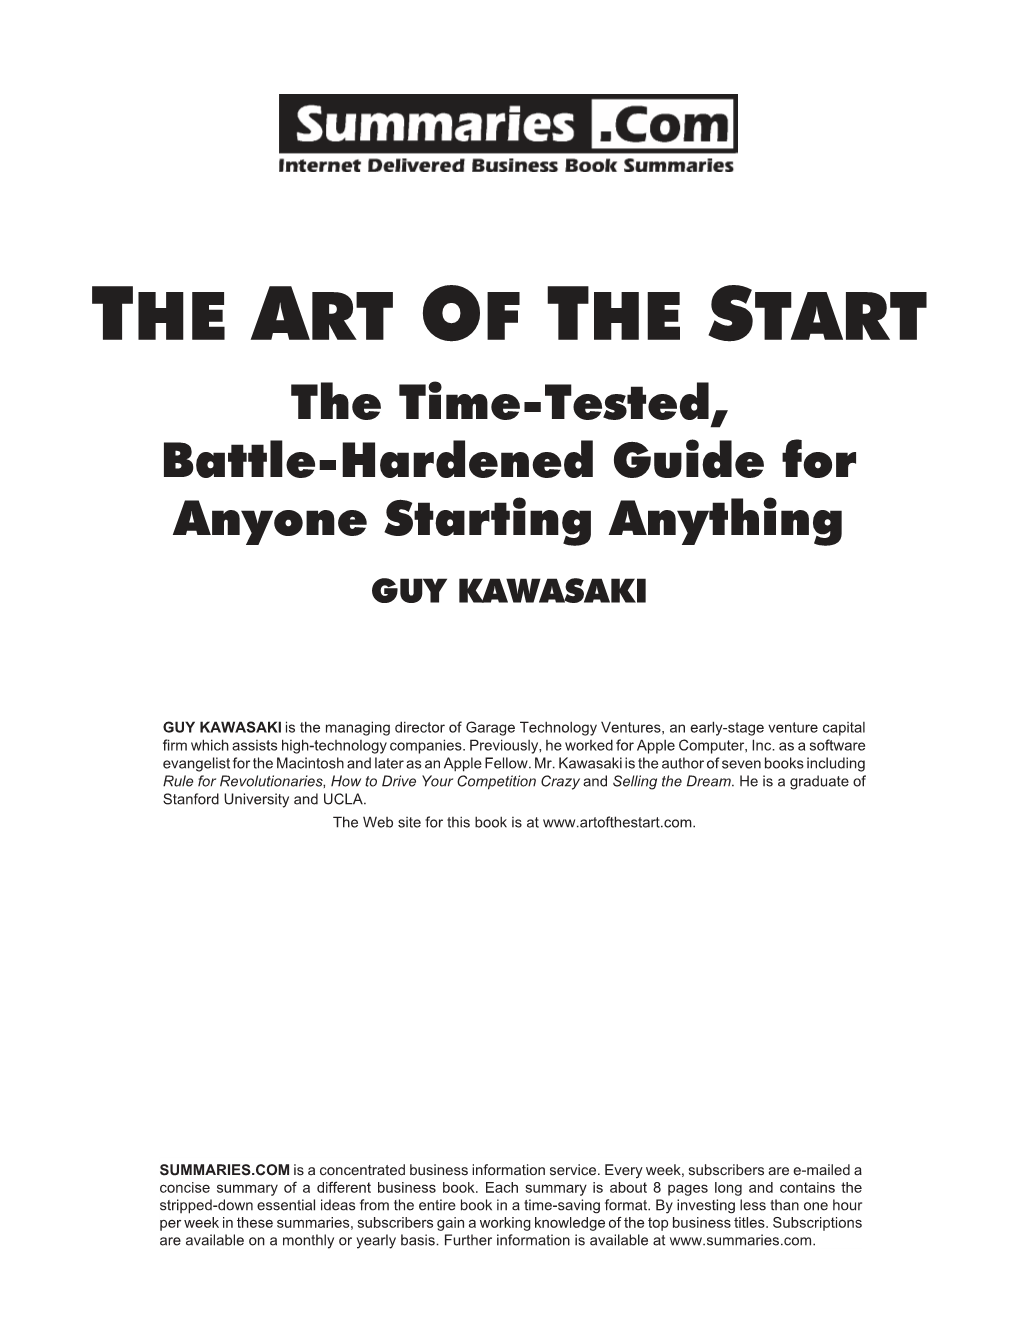 "The Art of the Start" by Guy Kawasaki